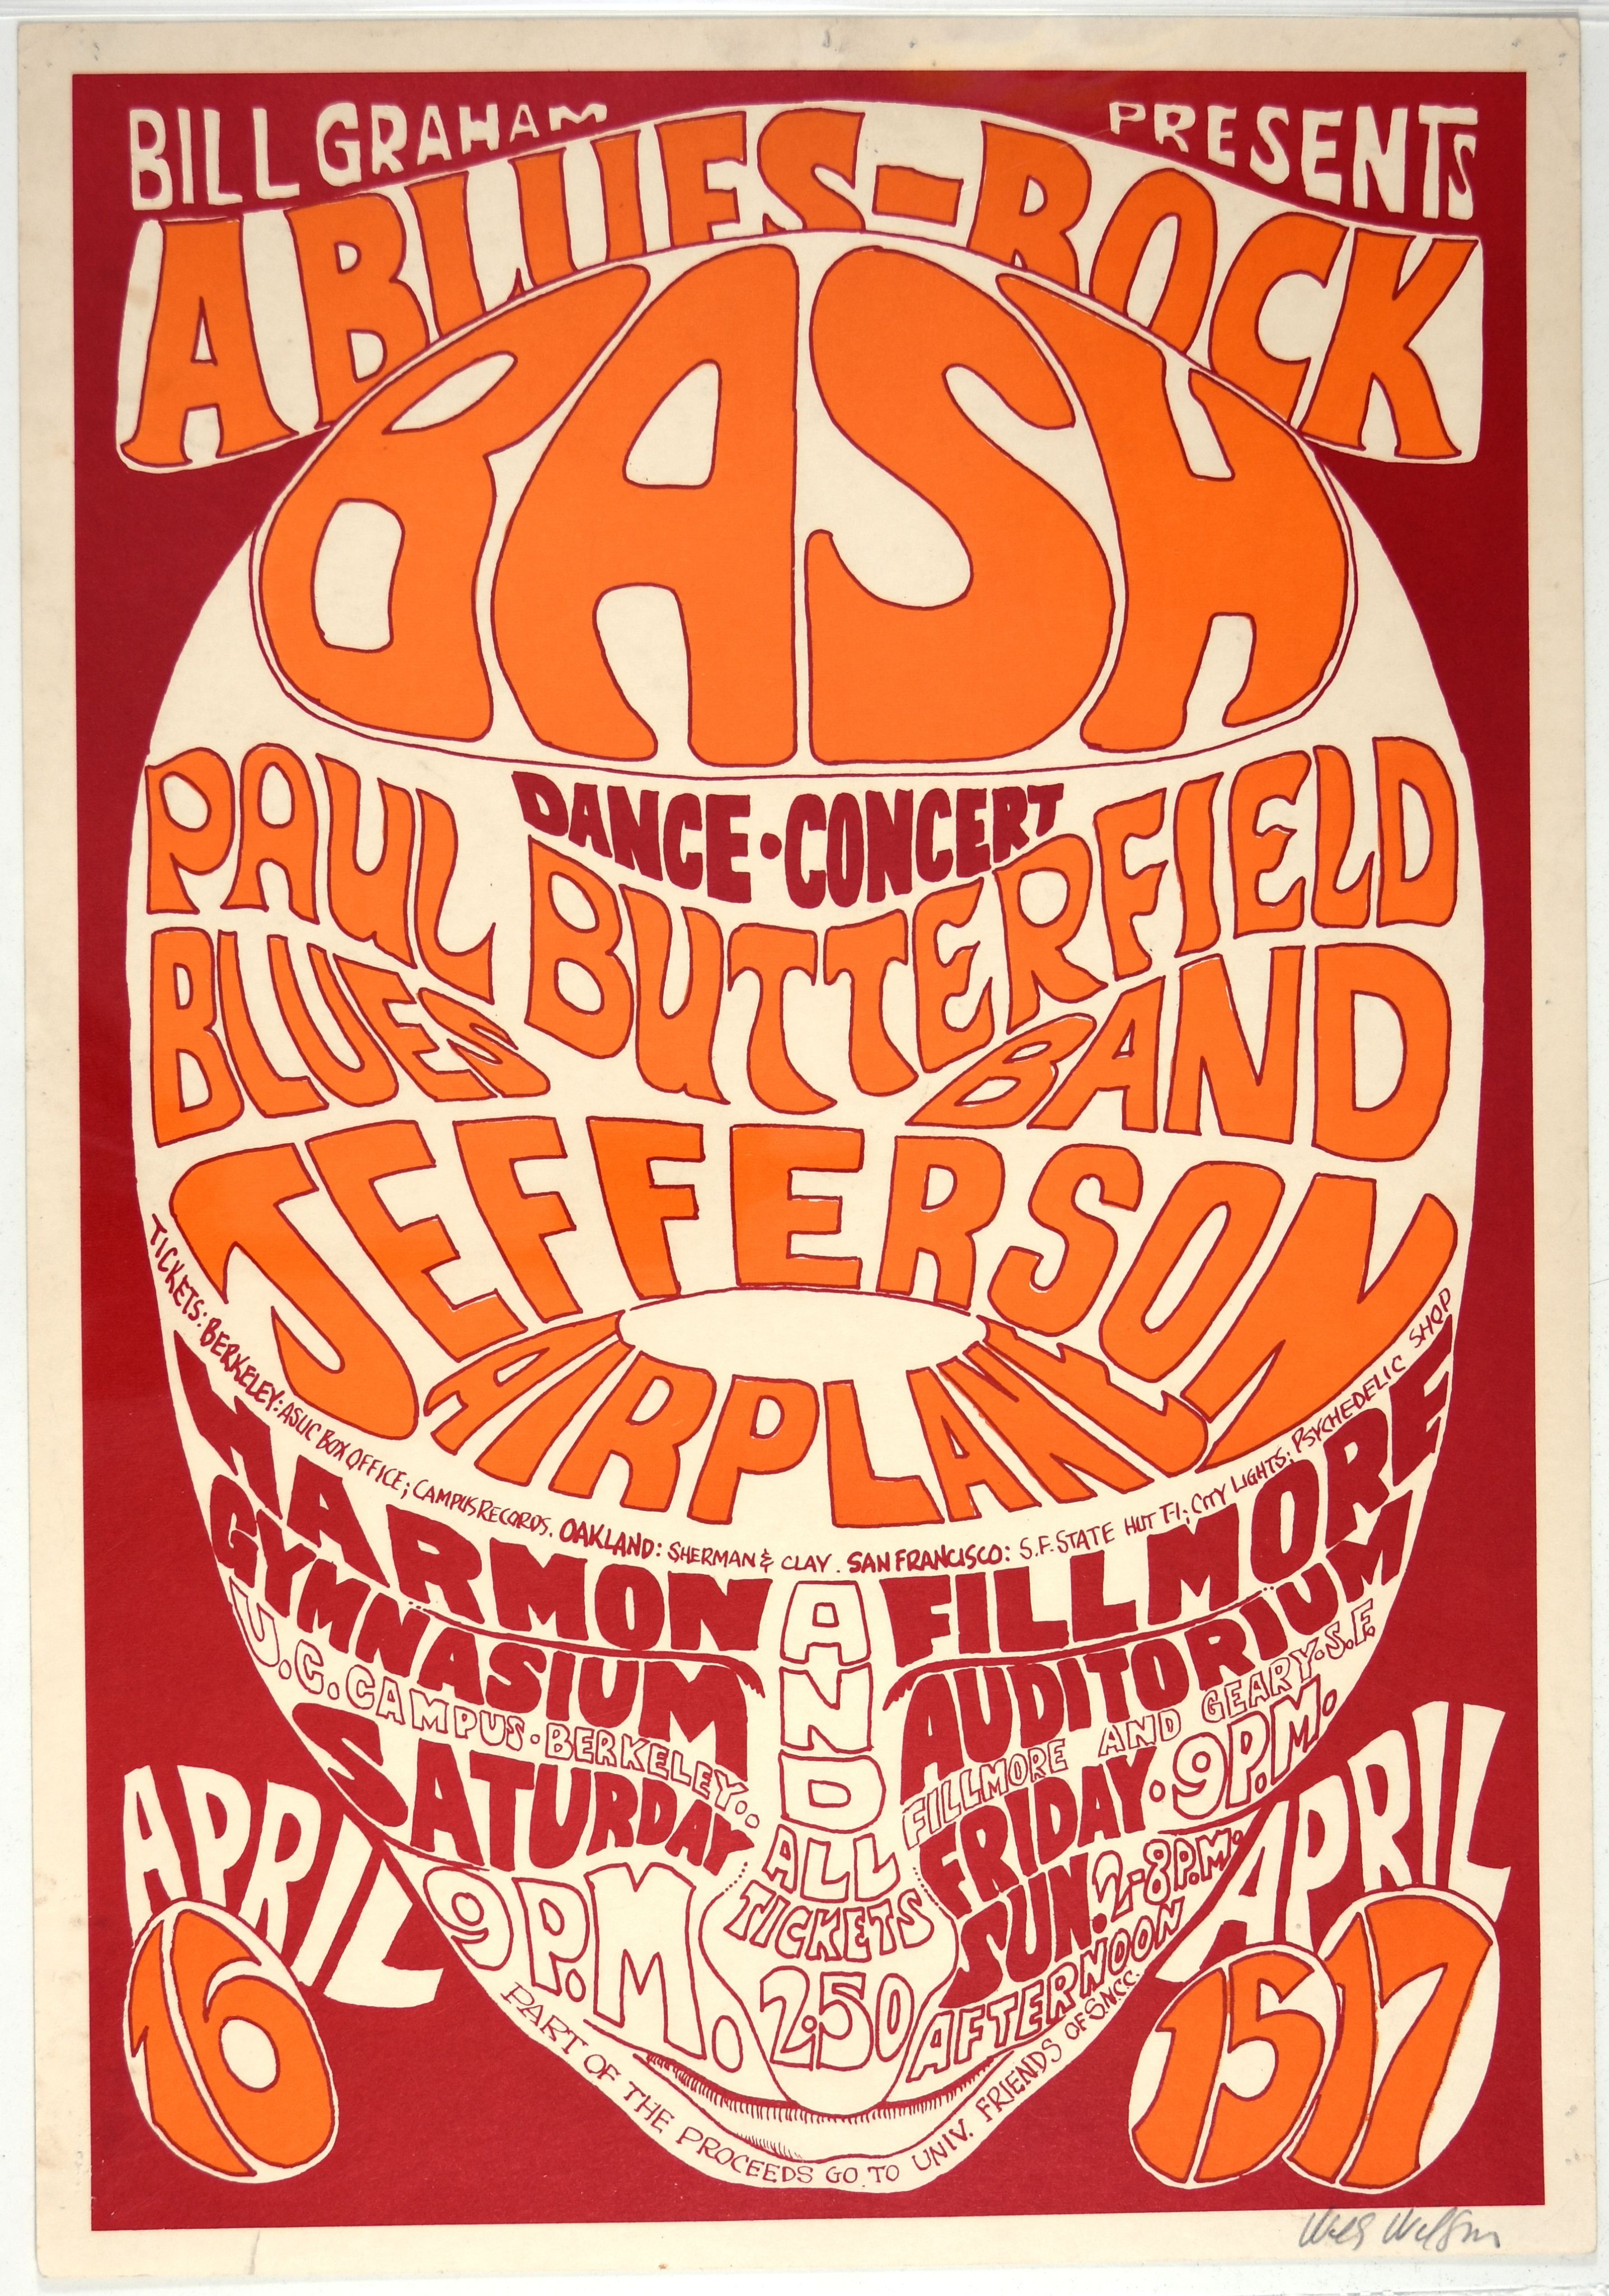 BG-3-OP-1 Paul Butterfield Blues Band The Fillmore 1966 Concert Poster